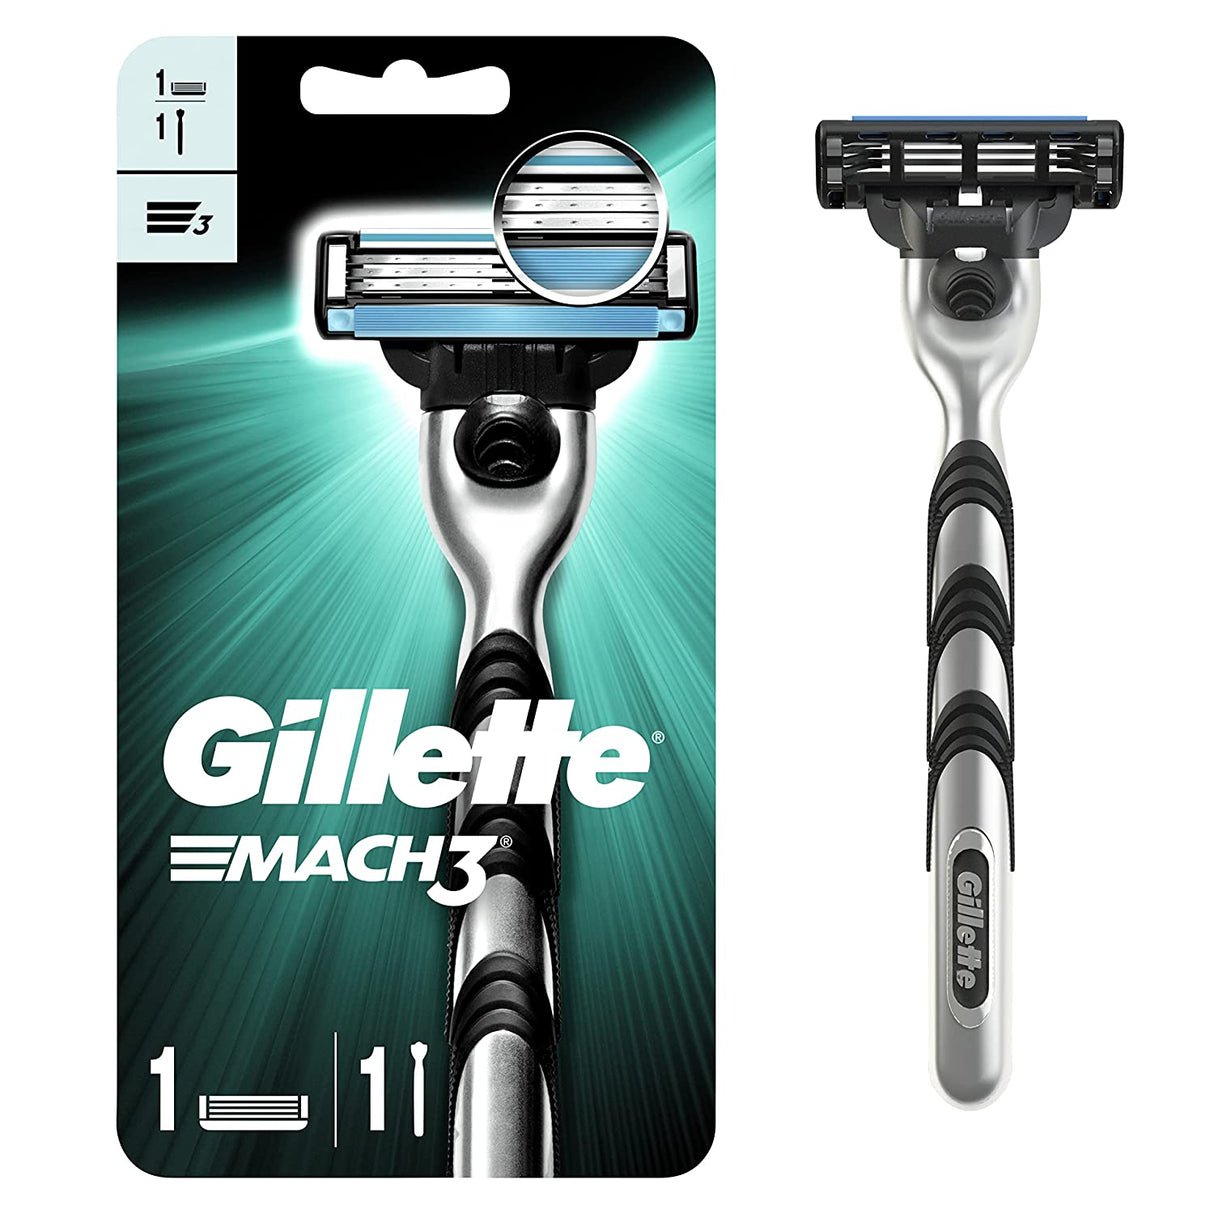 Gillette Mach3 Men's Razor Handle + 1 Blade Refill Find Your New Look Today!